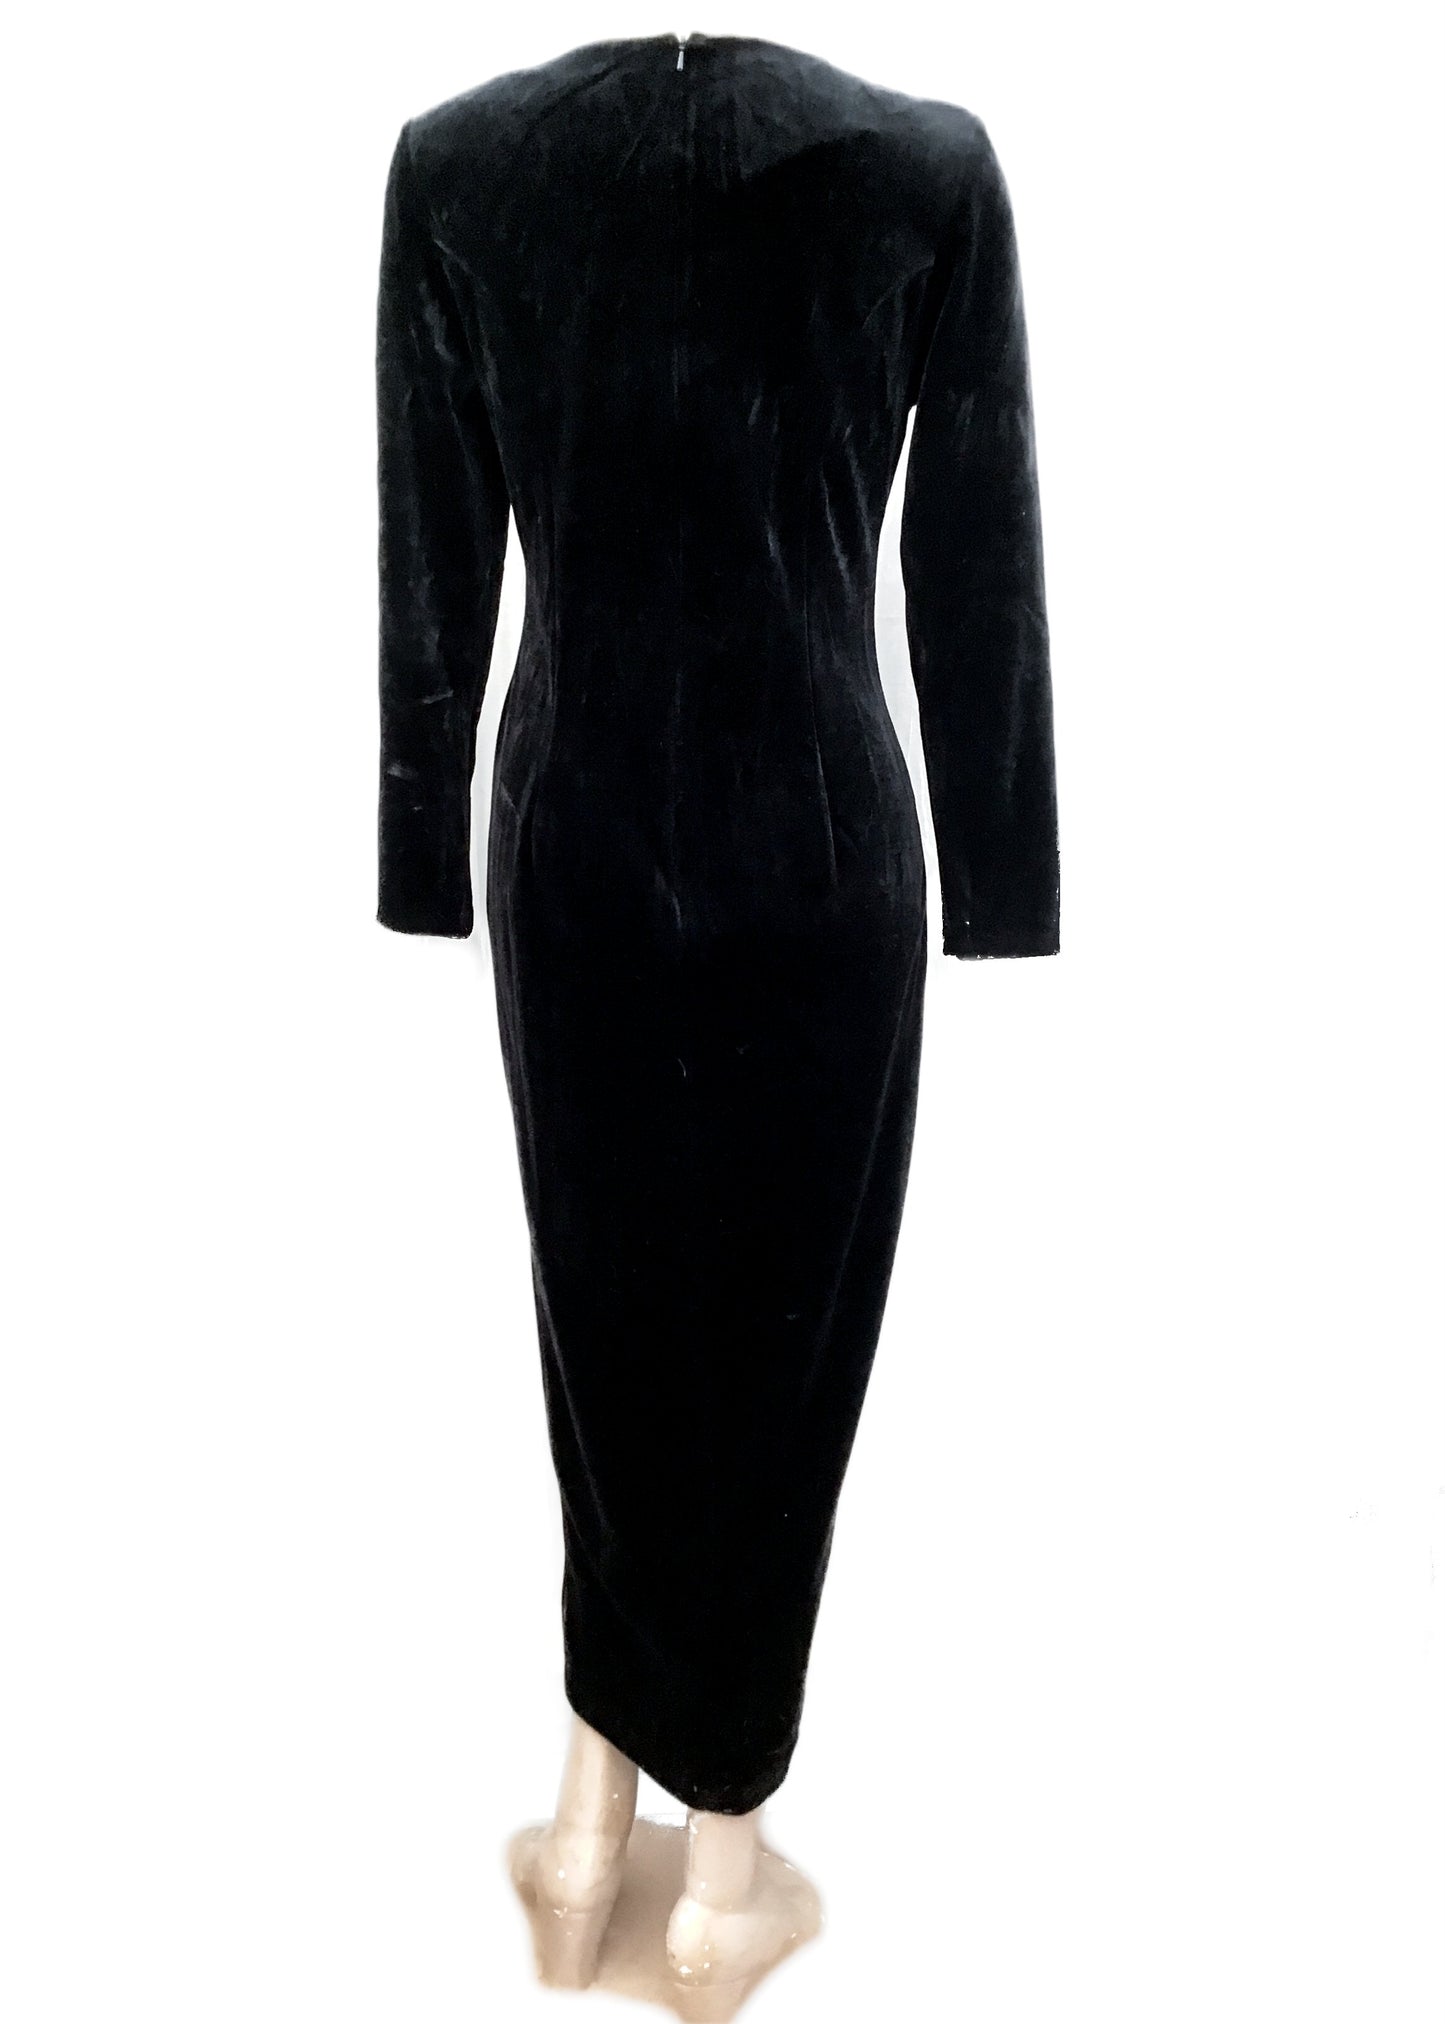 Vintage 80s Black Stretch Velvet Cocktail Dress • House of Fraser